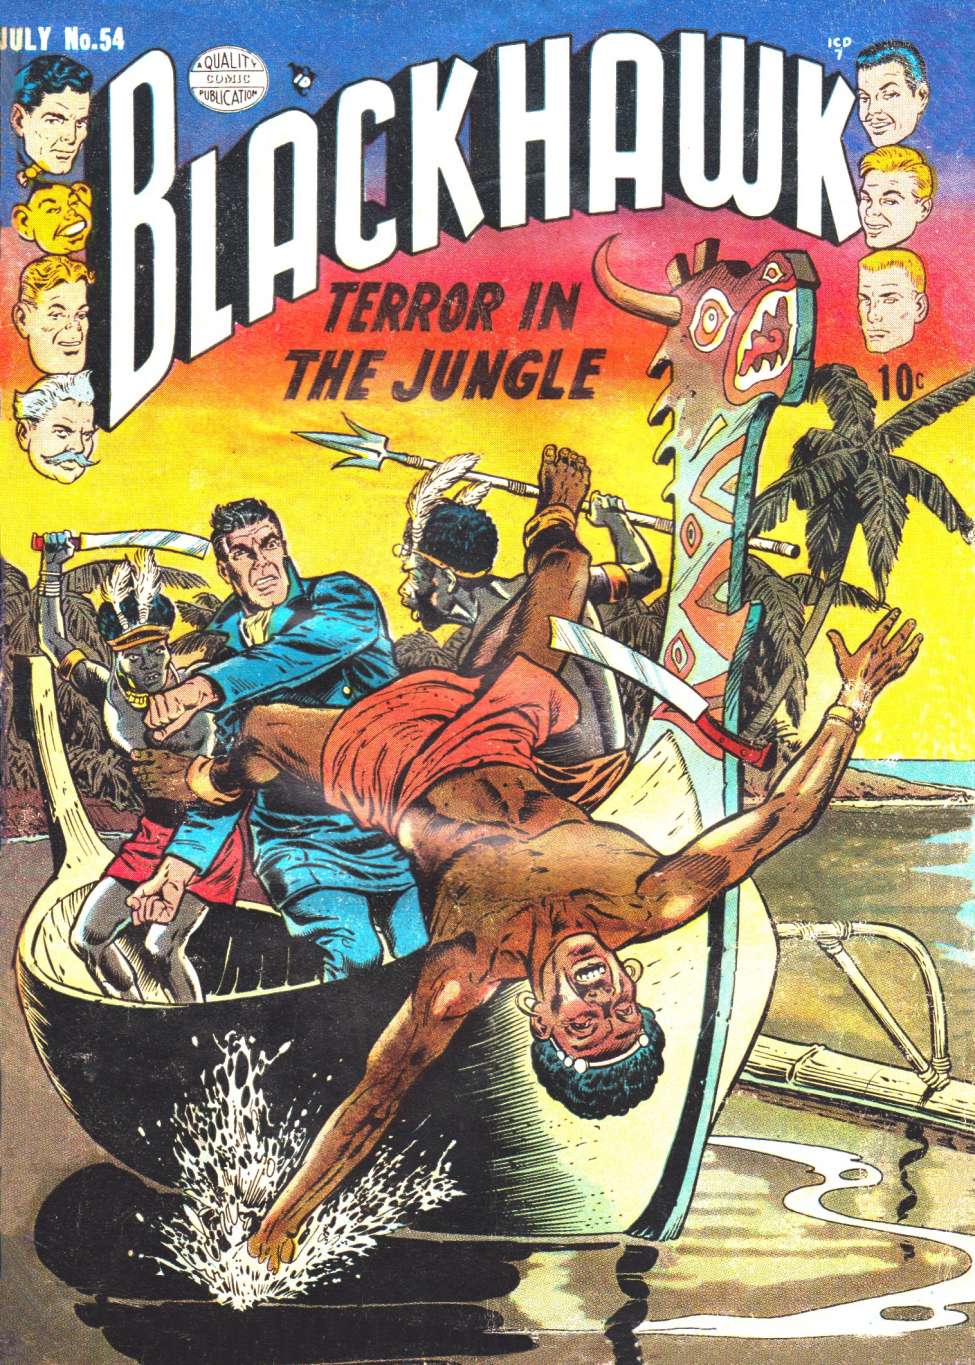 Comic Book Cover For Blackhawk 54